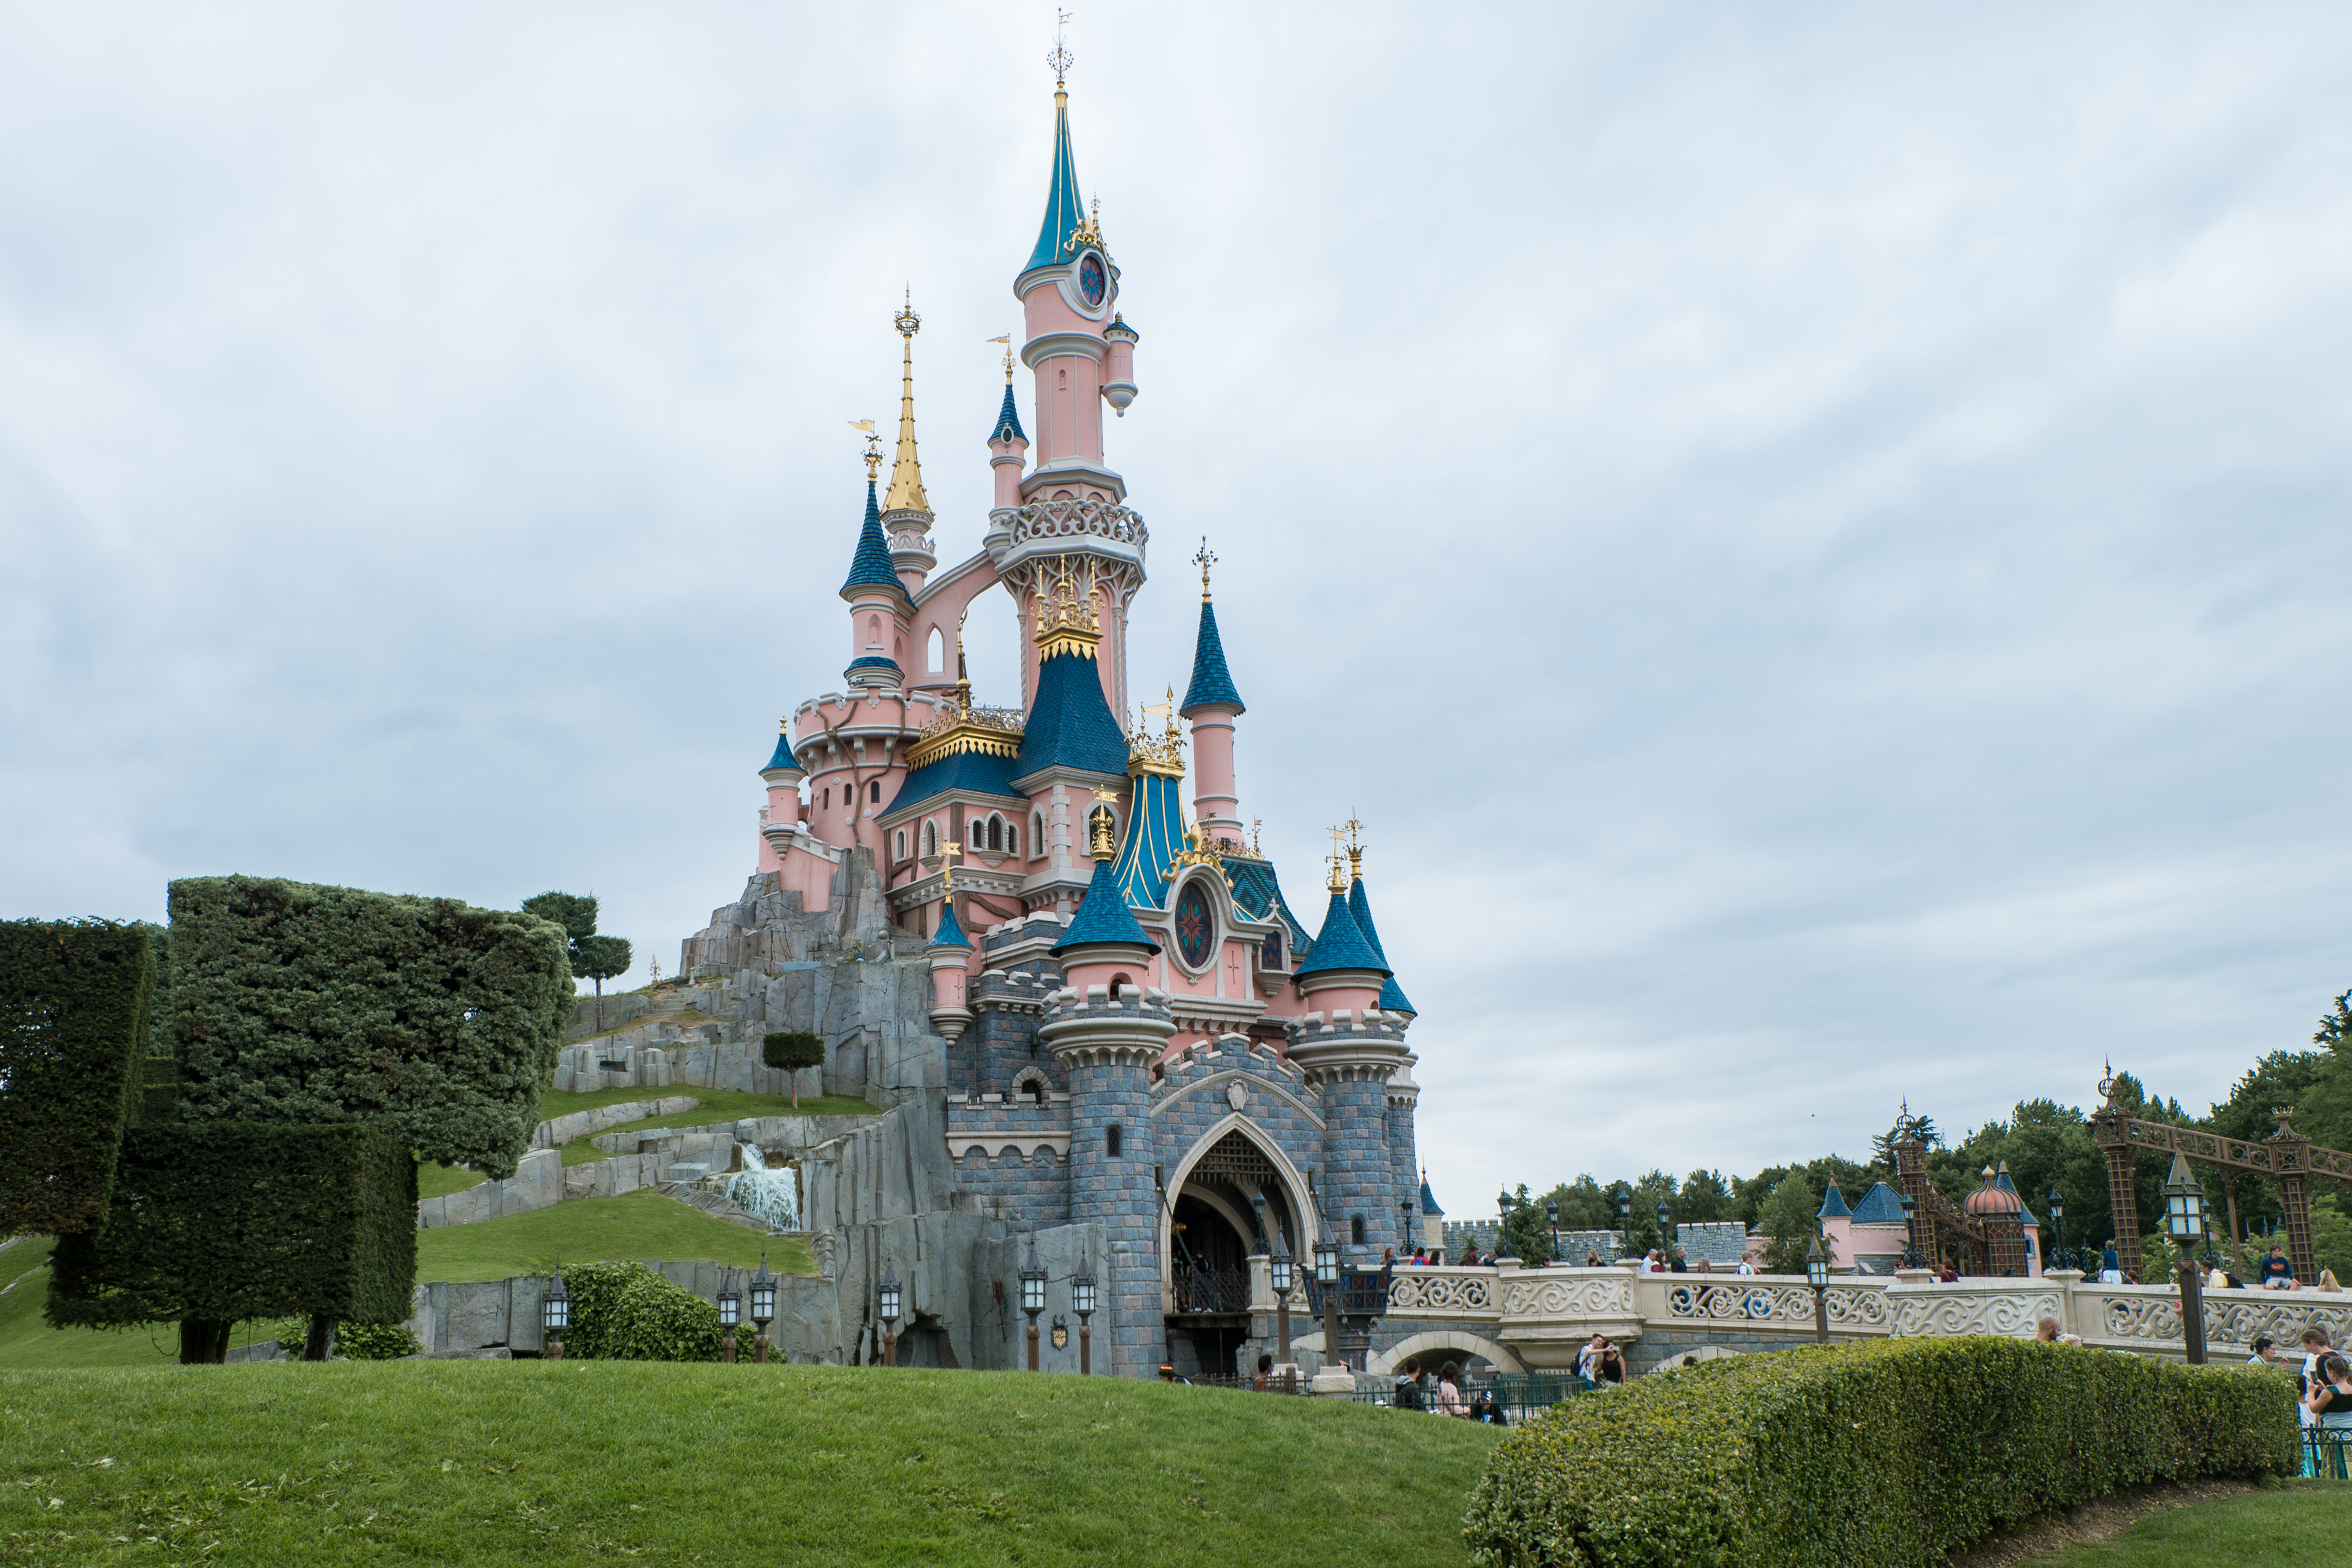 Замок диснейленд. Замок спящей красавицы Disneyland. Парижский Диснейленд замок спящей красавицы. Диснейленд Париж замок спящей красавицы внутри. Диснейленд Париж архитектура.